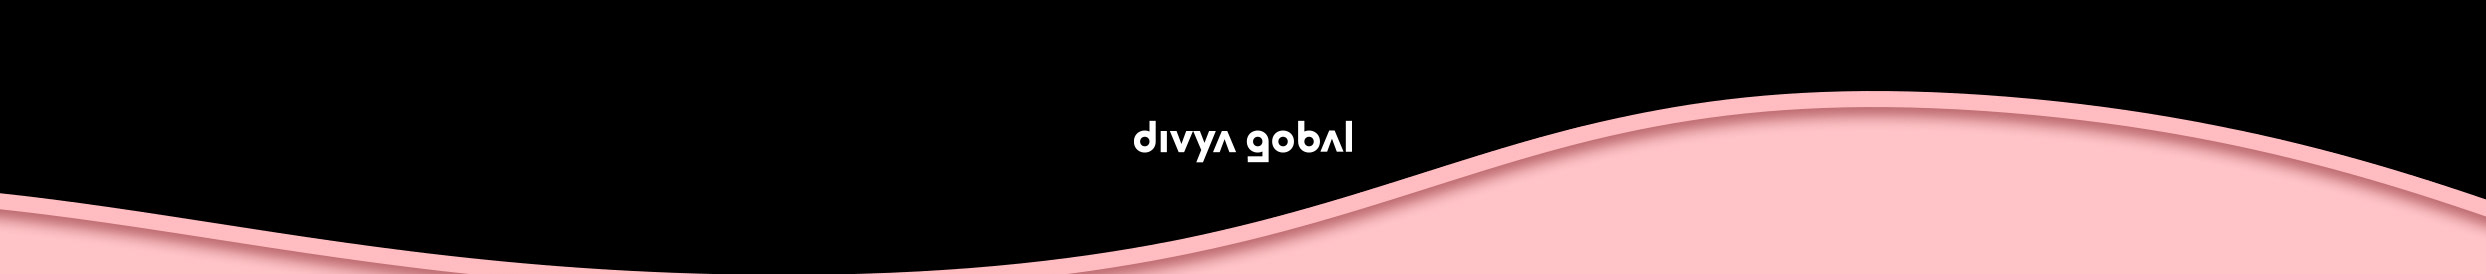 Banner de perfil de Divya Gobal